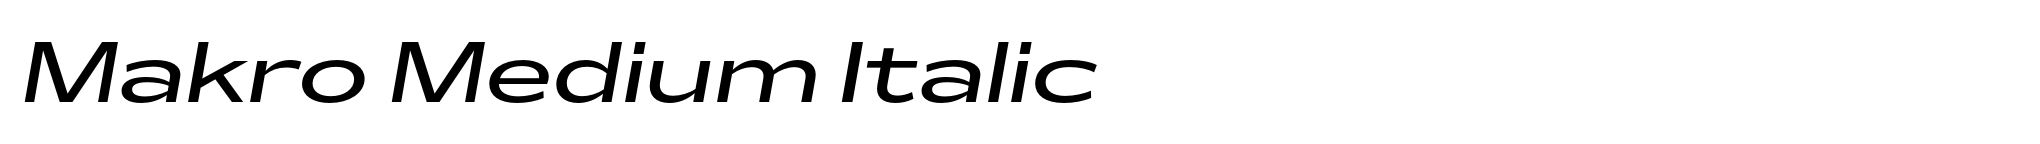 Makro Medium Italic image